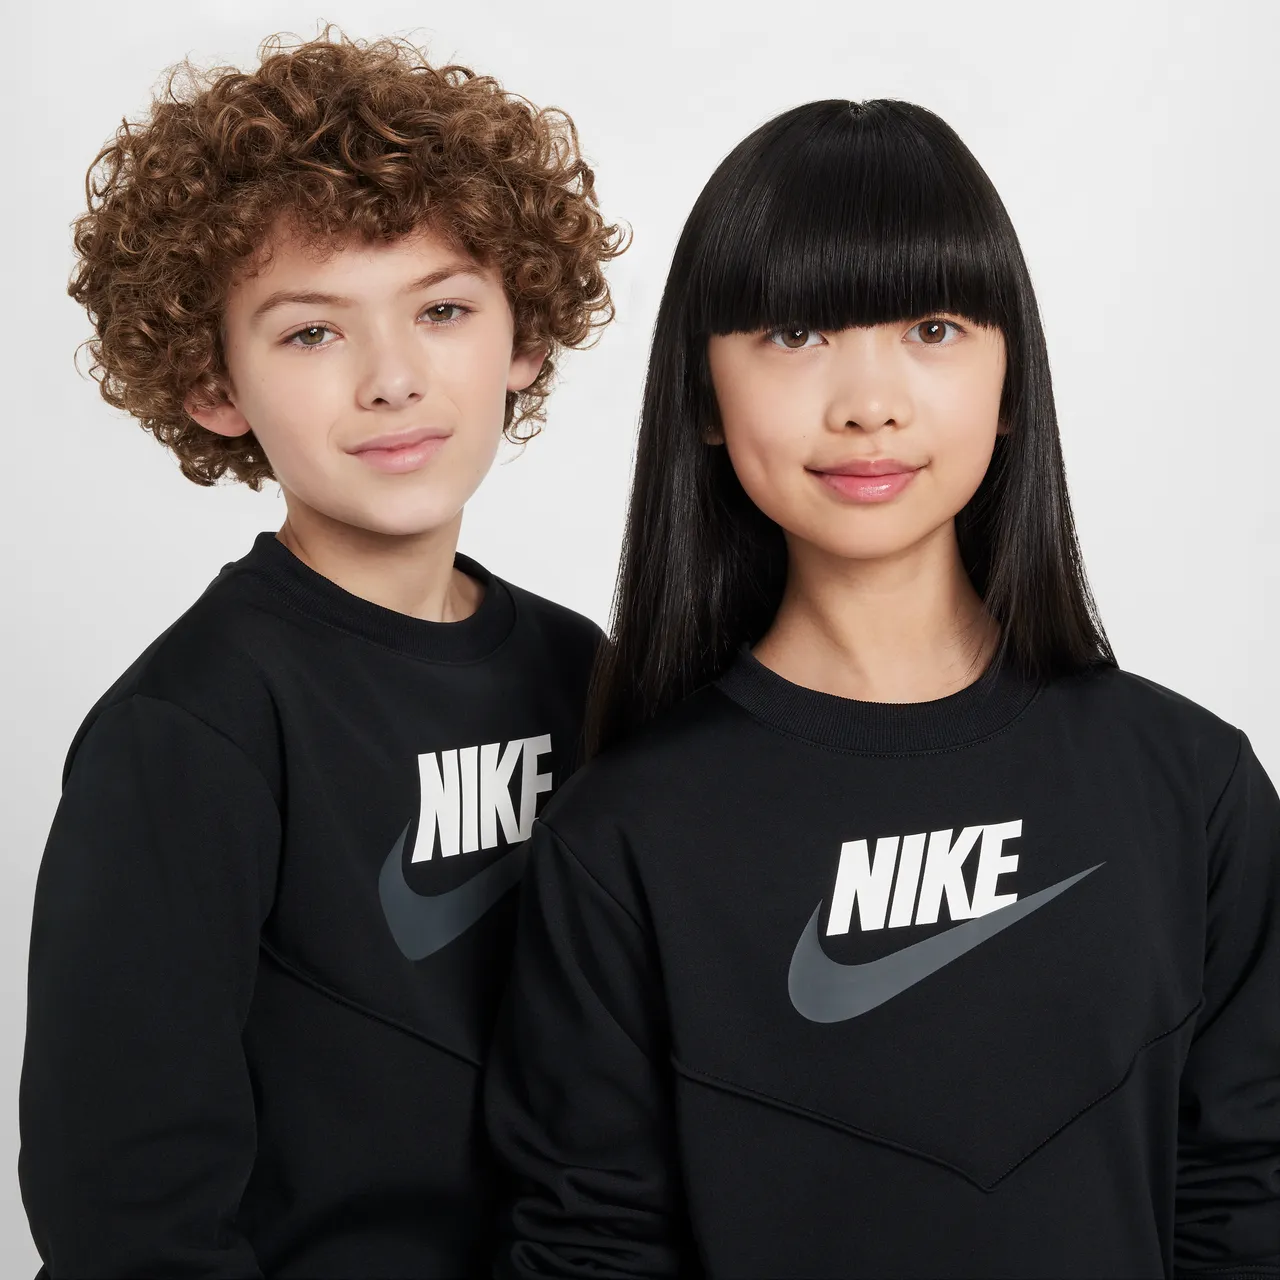 Nike Sportswear Trainingsanzug für ältere Kinder - Schwarz